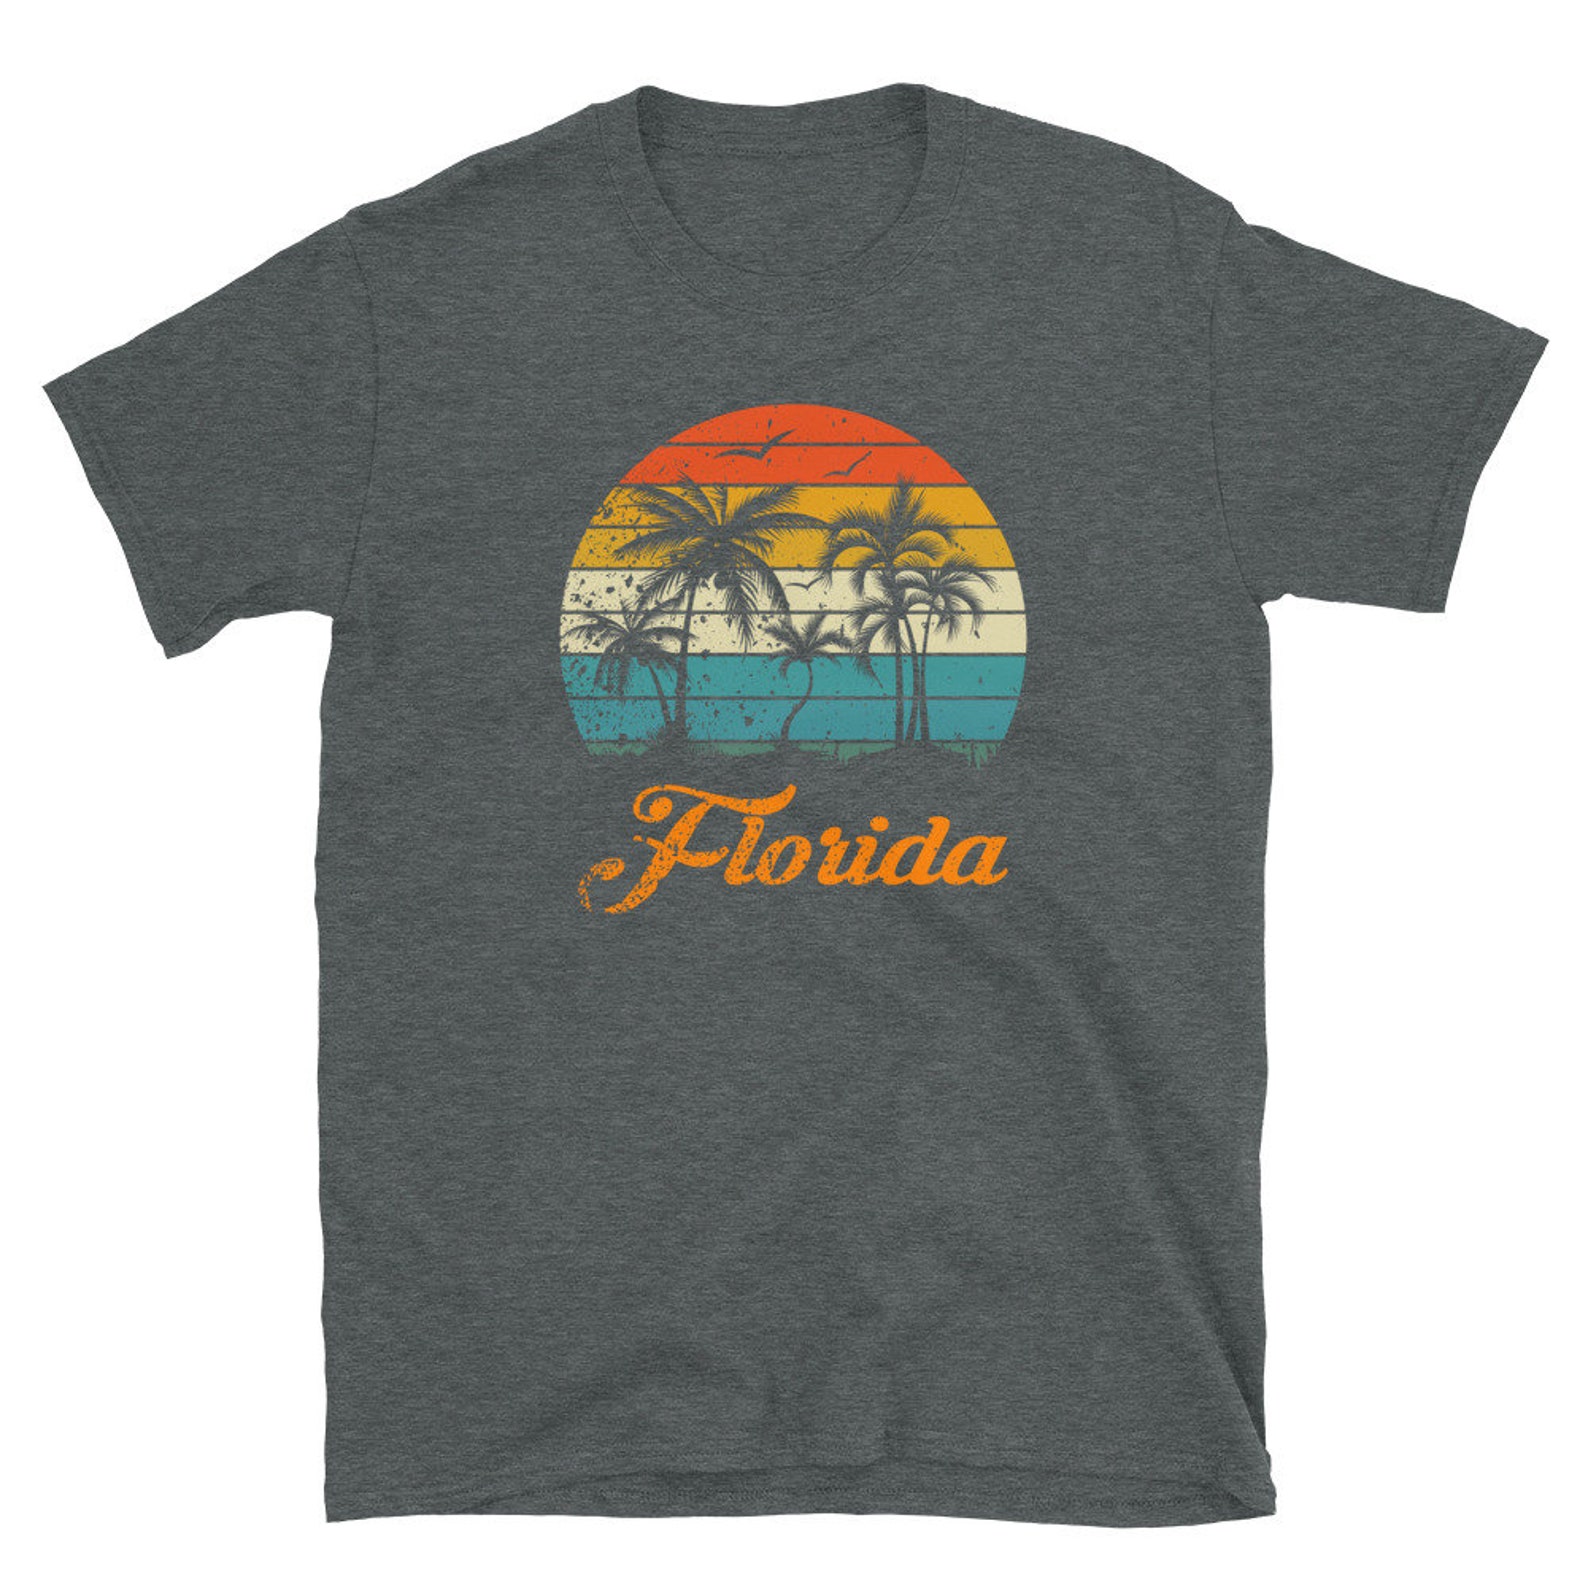 visit florida shirt